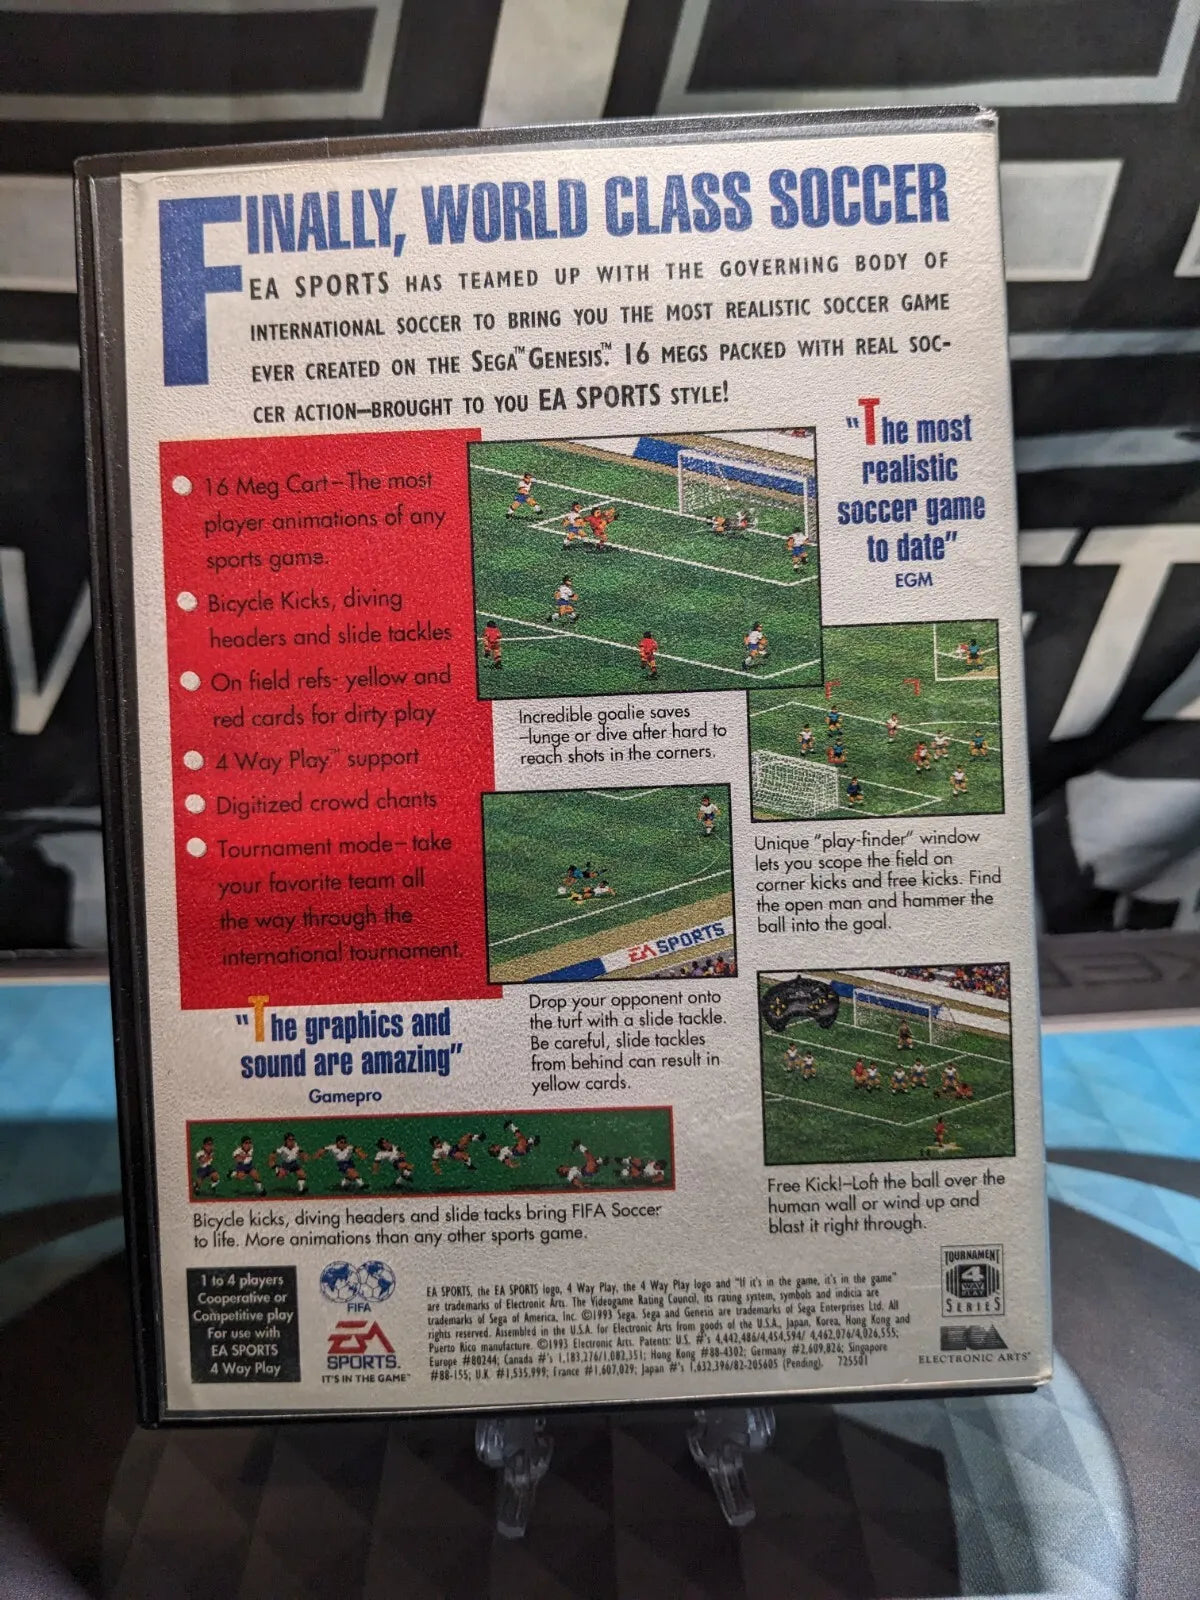 FIFA International Soccer (Sega Genesis, 1993)